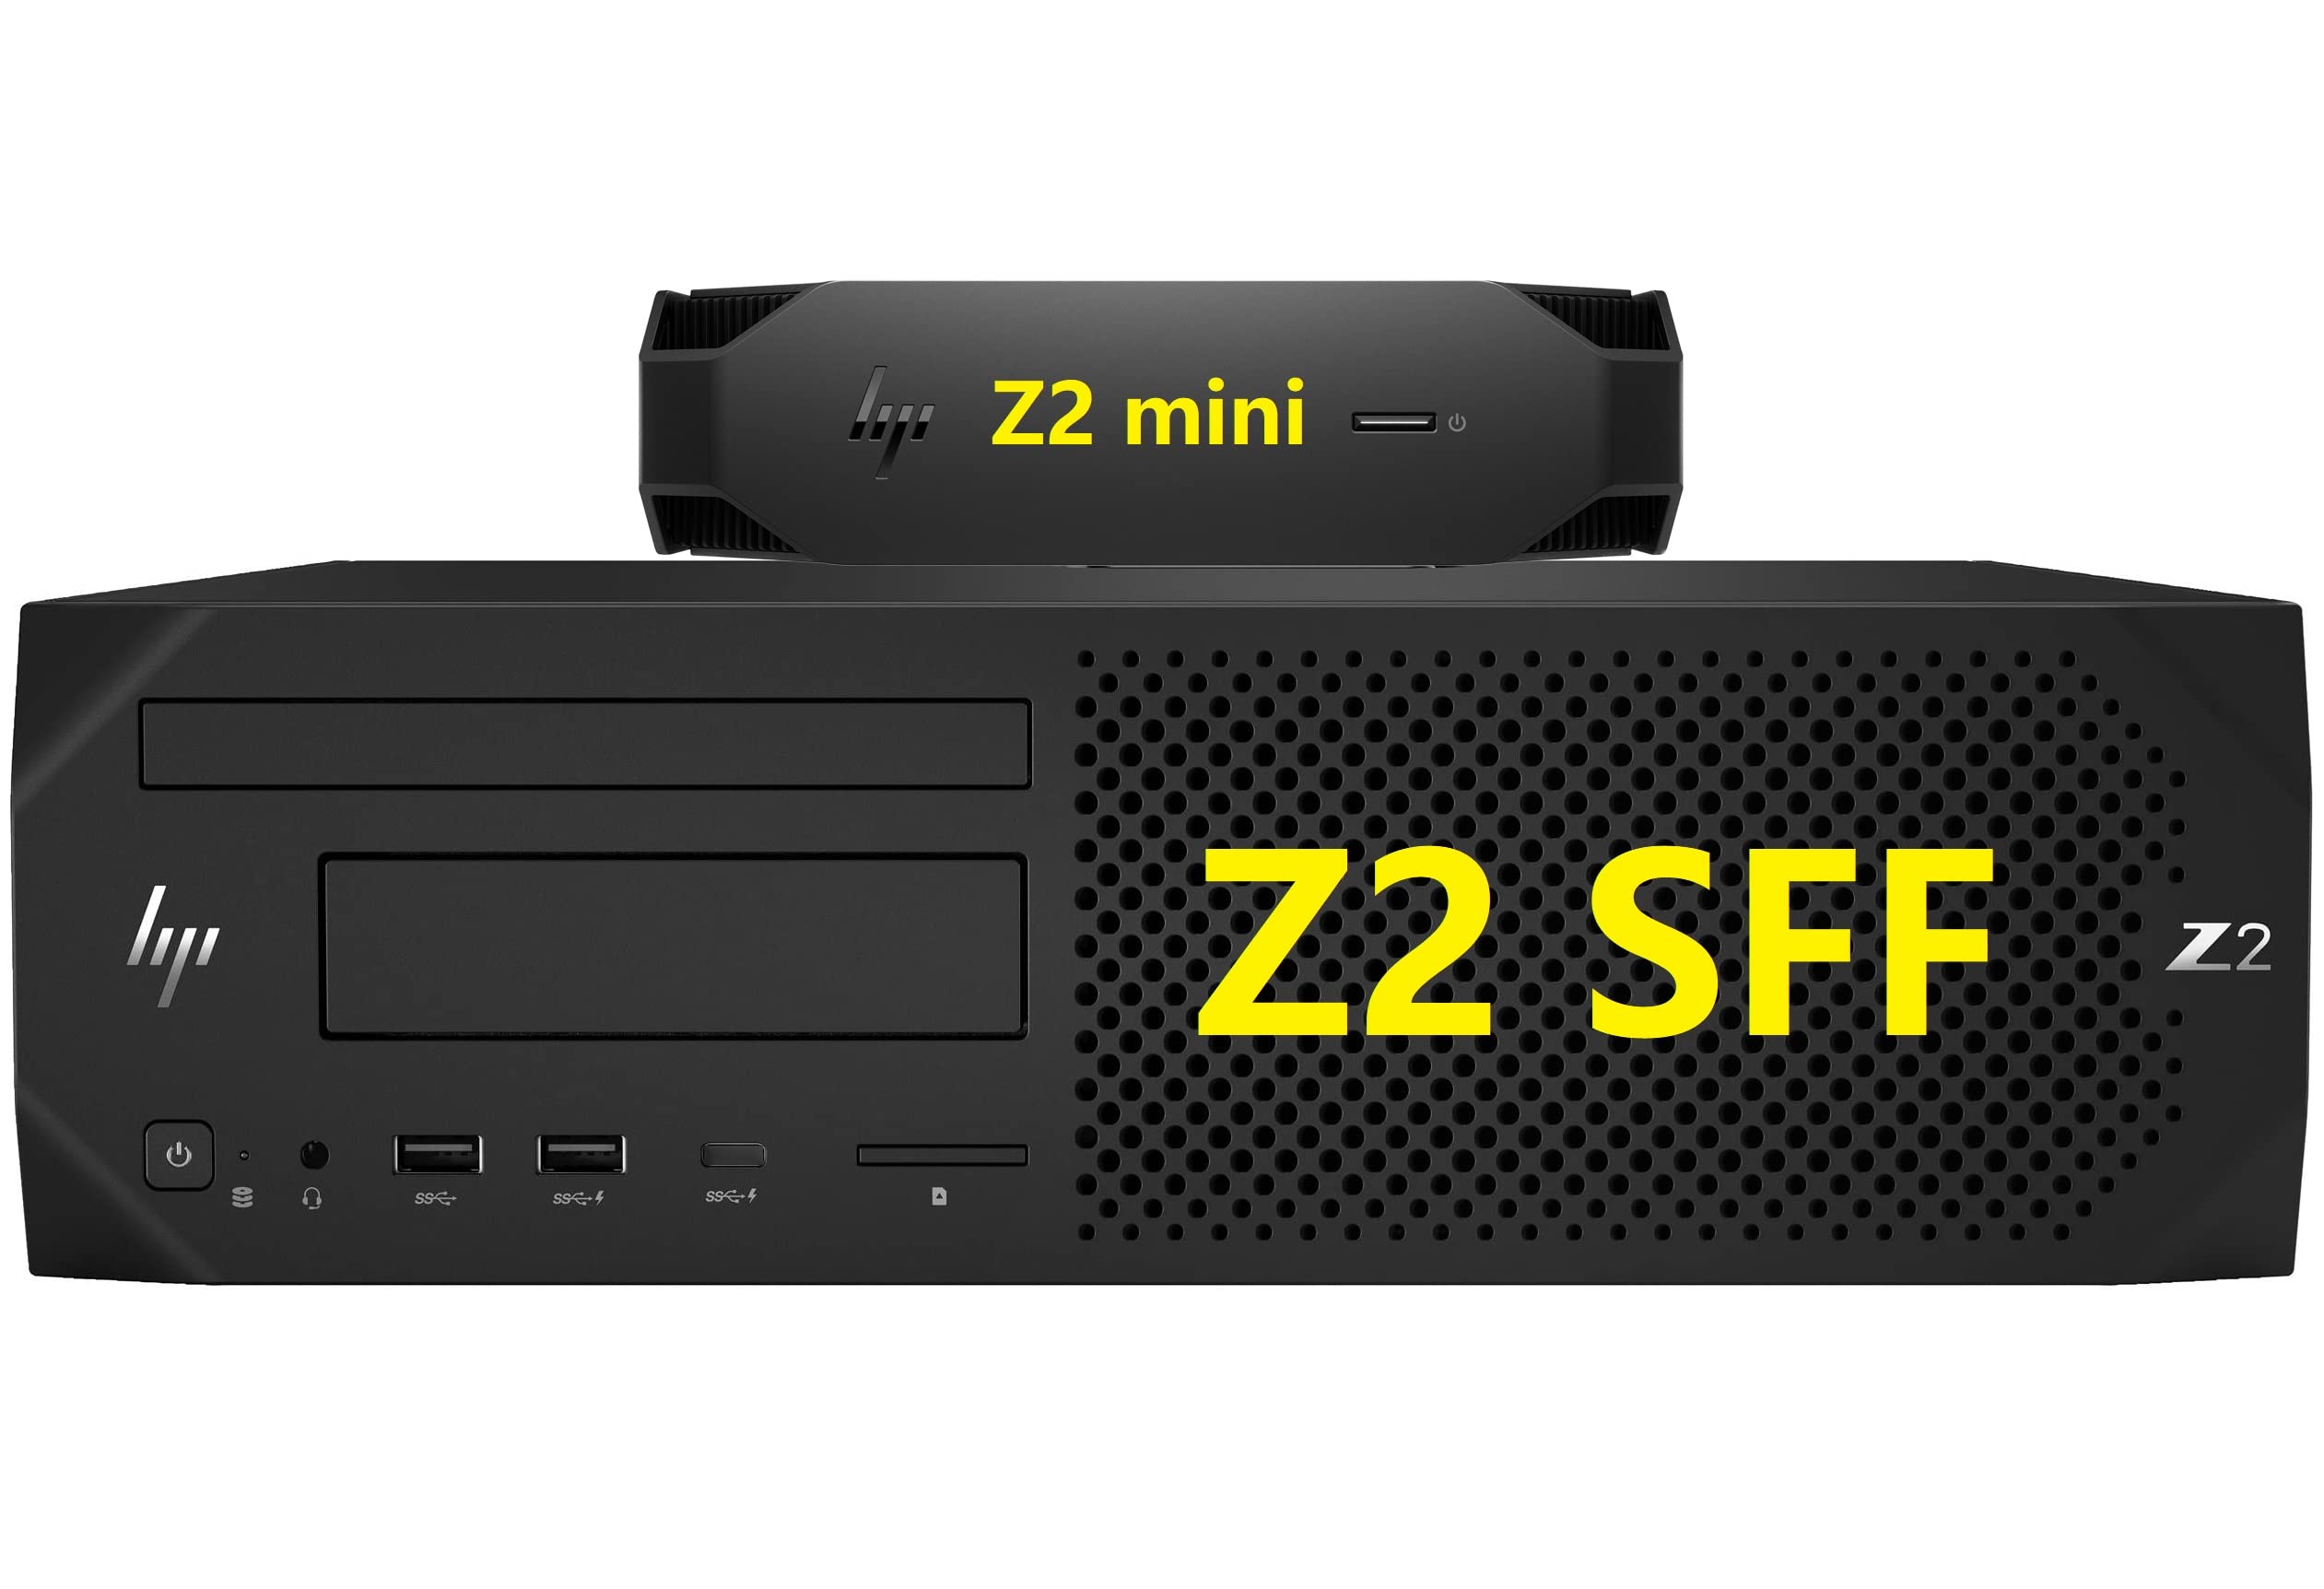 HP Z2 G4 SFF Small Form Factor Workstation Business Desktop (Intel 6-Core i5-8500 (Beats i7-10510U), 16GB DDR4 RAM, 512GB PCle SSD) No DVD, Keyboard, Mouse, Display Port, WiFi, IST HDM,Win 10/11 Pro